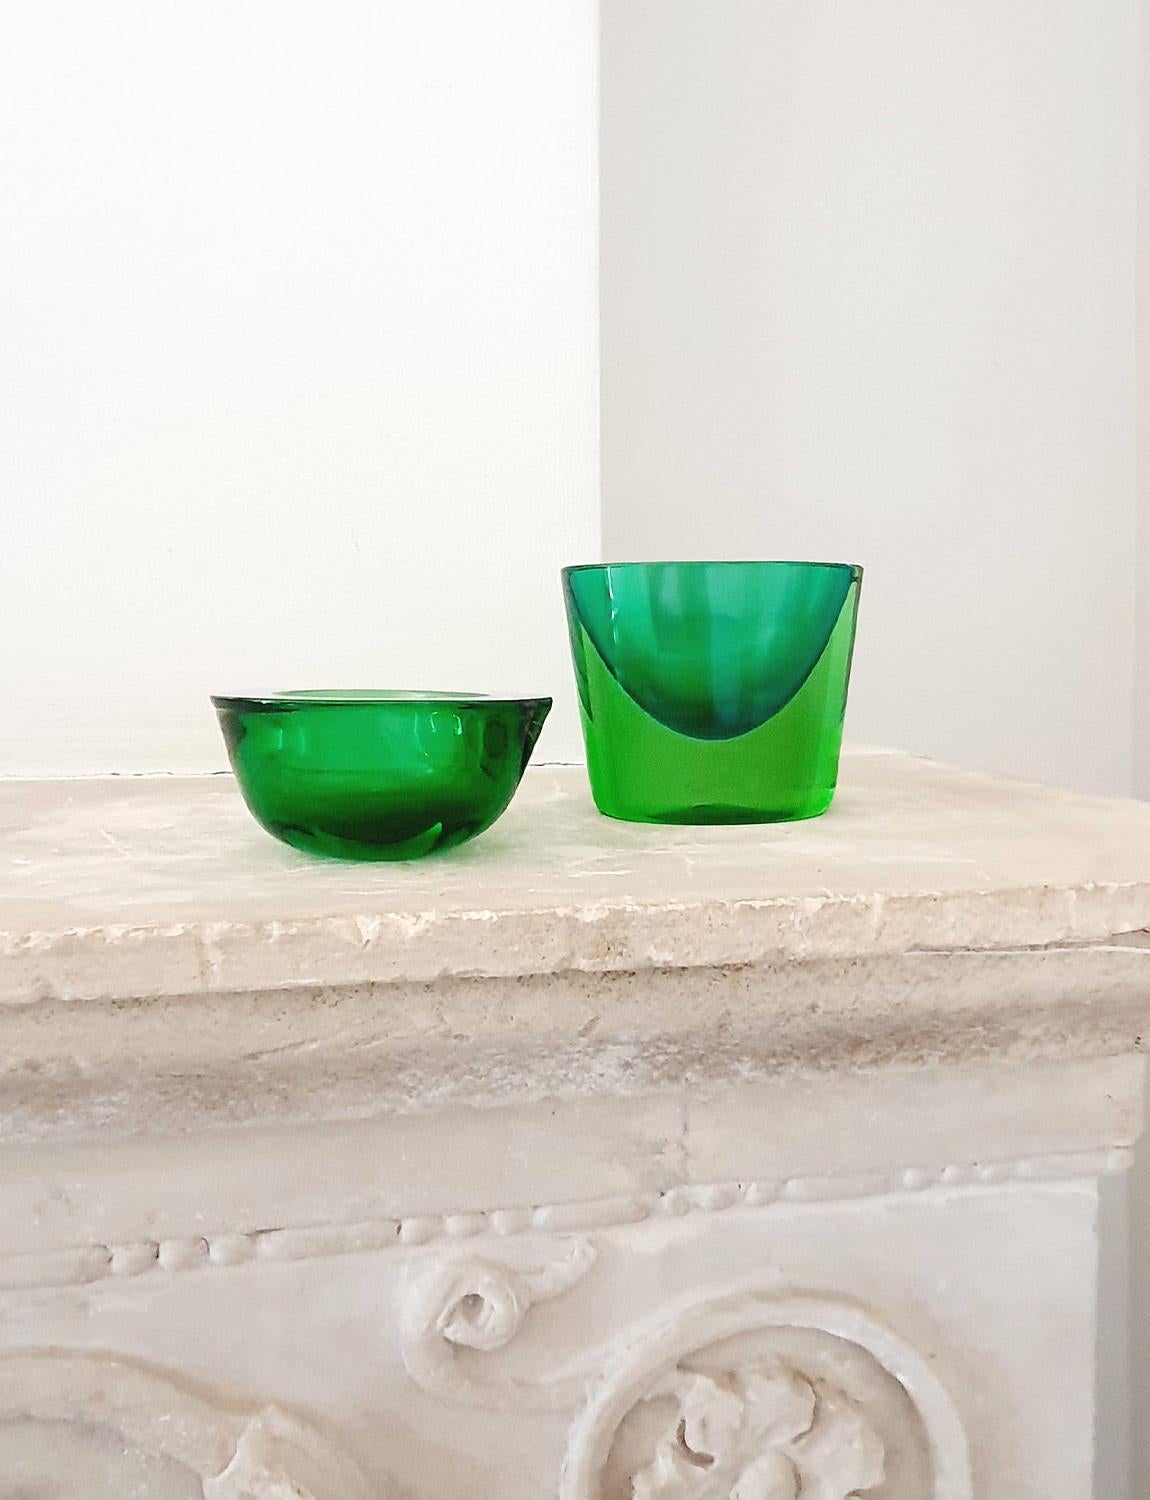 Doppel Sommerso Flavio Poli Grüne Vase, 1960er Jahre (Glas) im Angebot